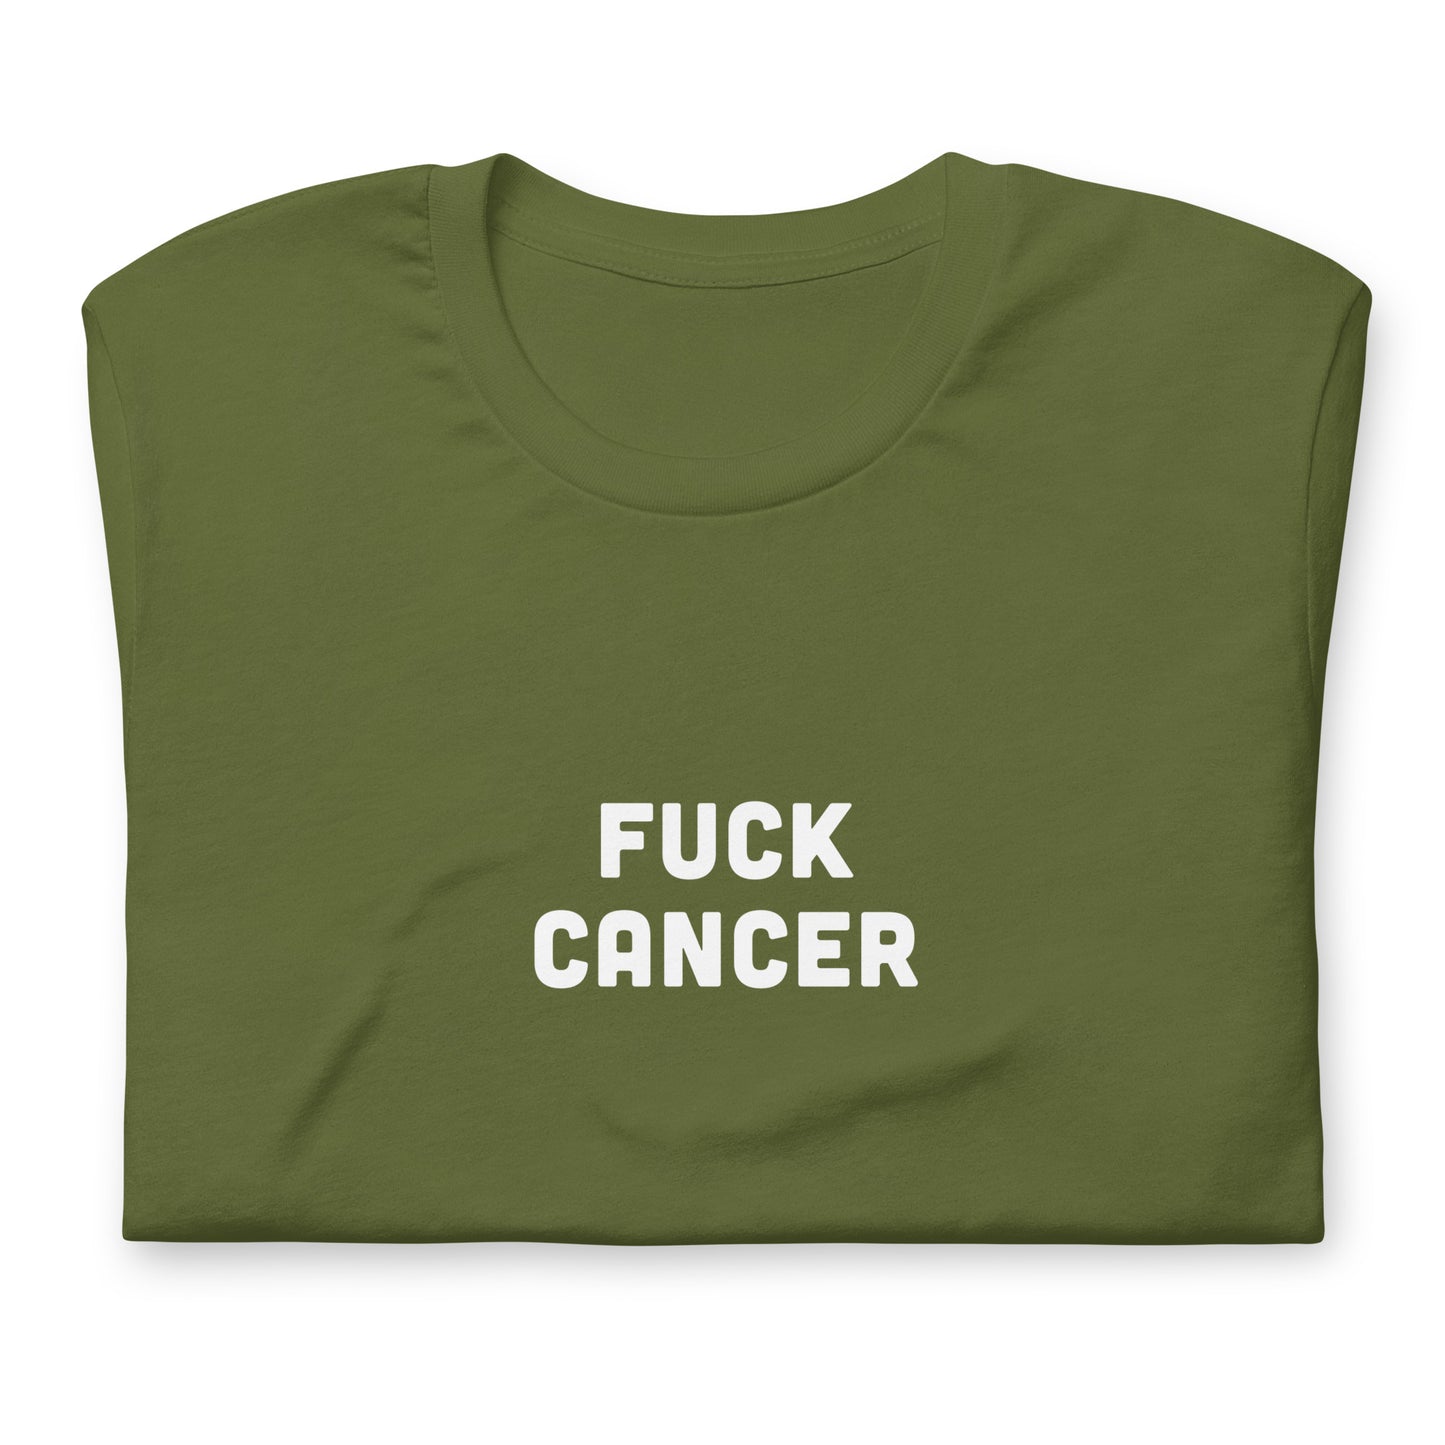 Fuck Cancer T-Shirt Size 2XL Color Black